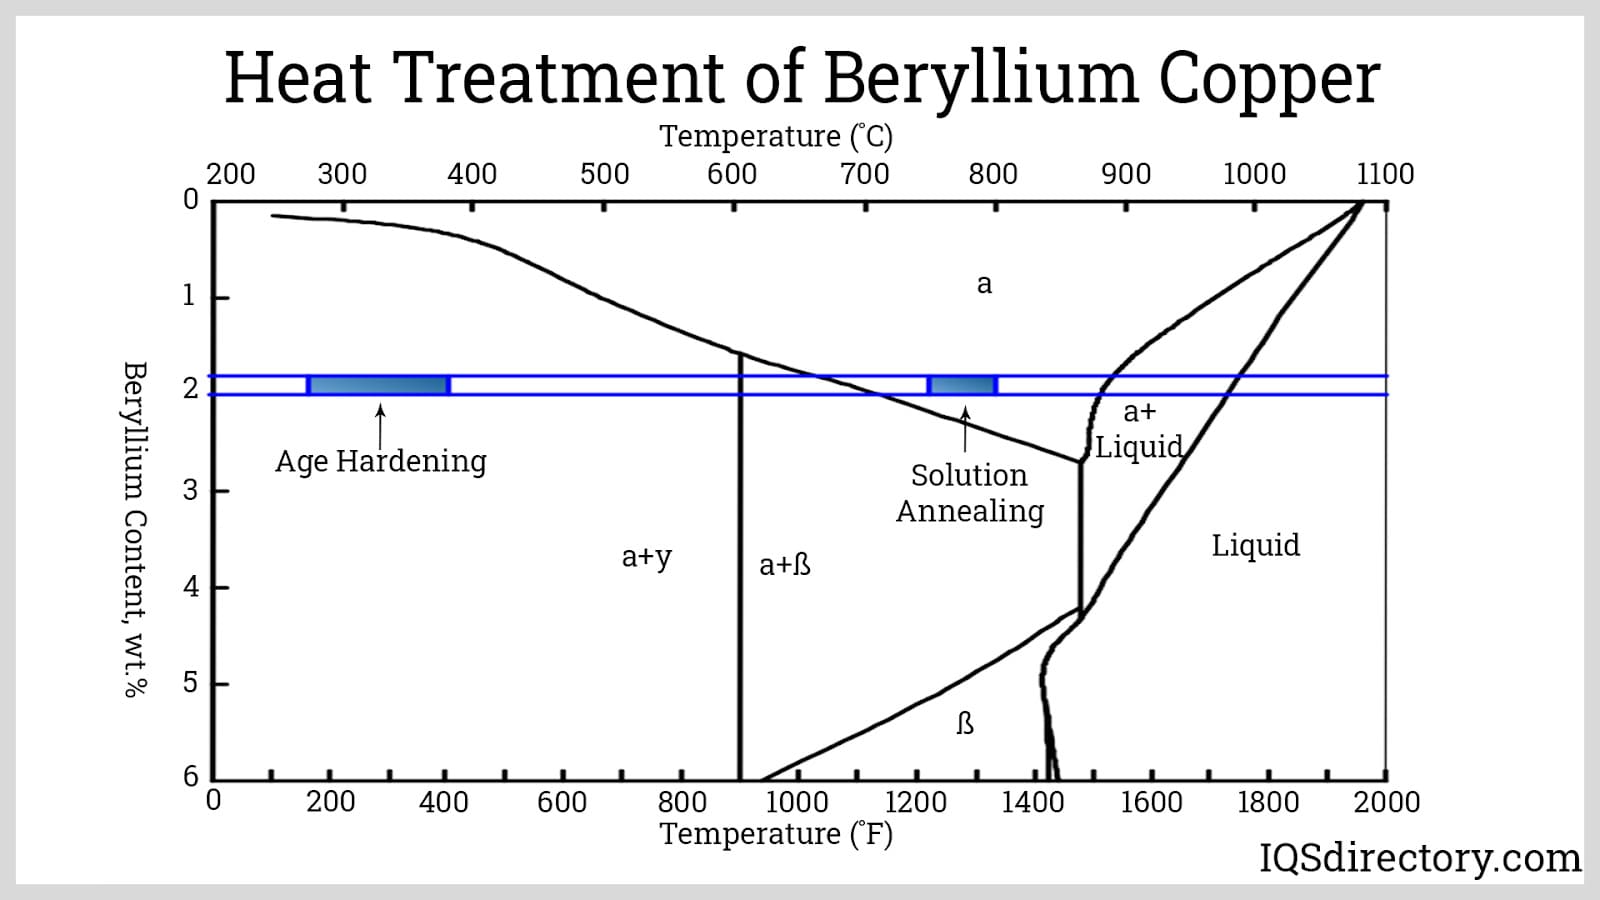 Heat Treatment of Beryllium Copper